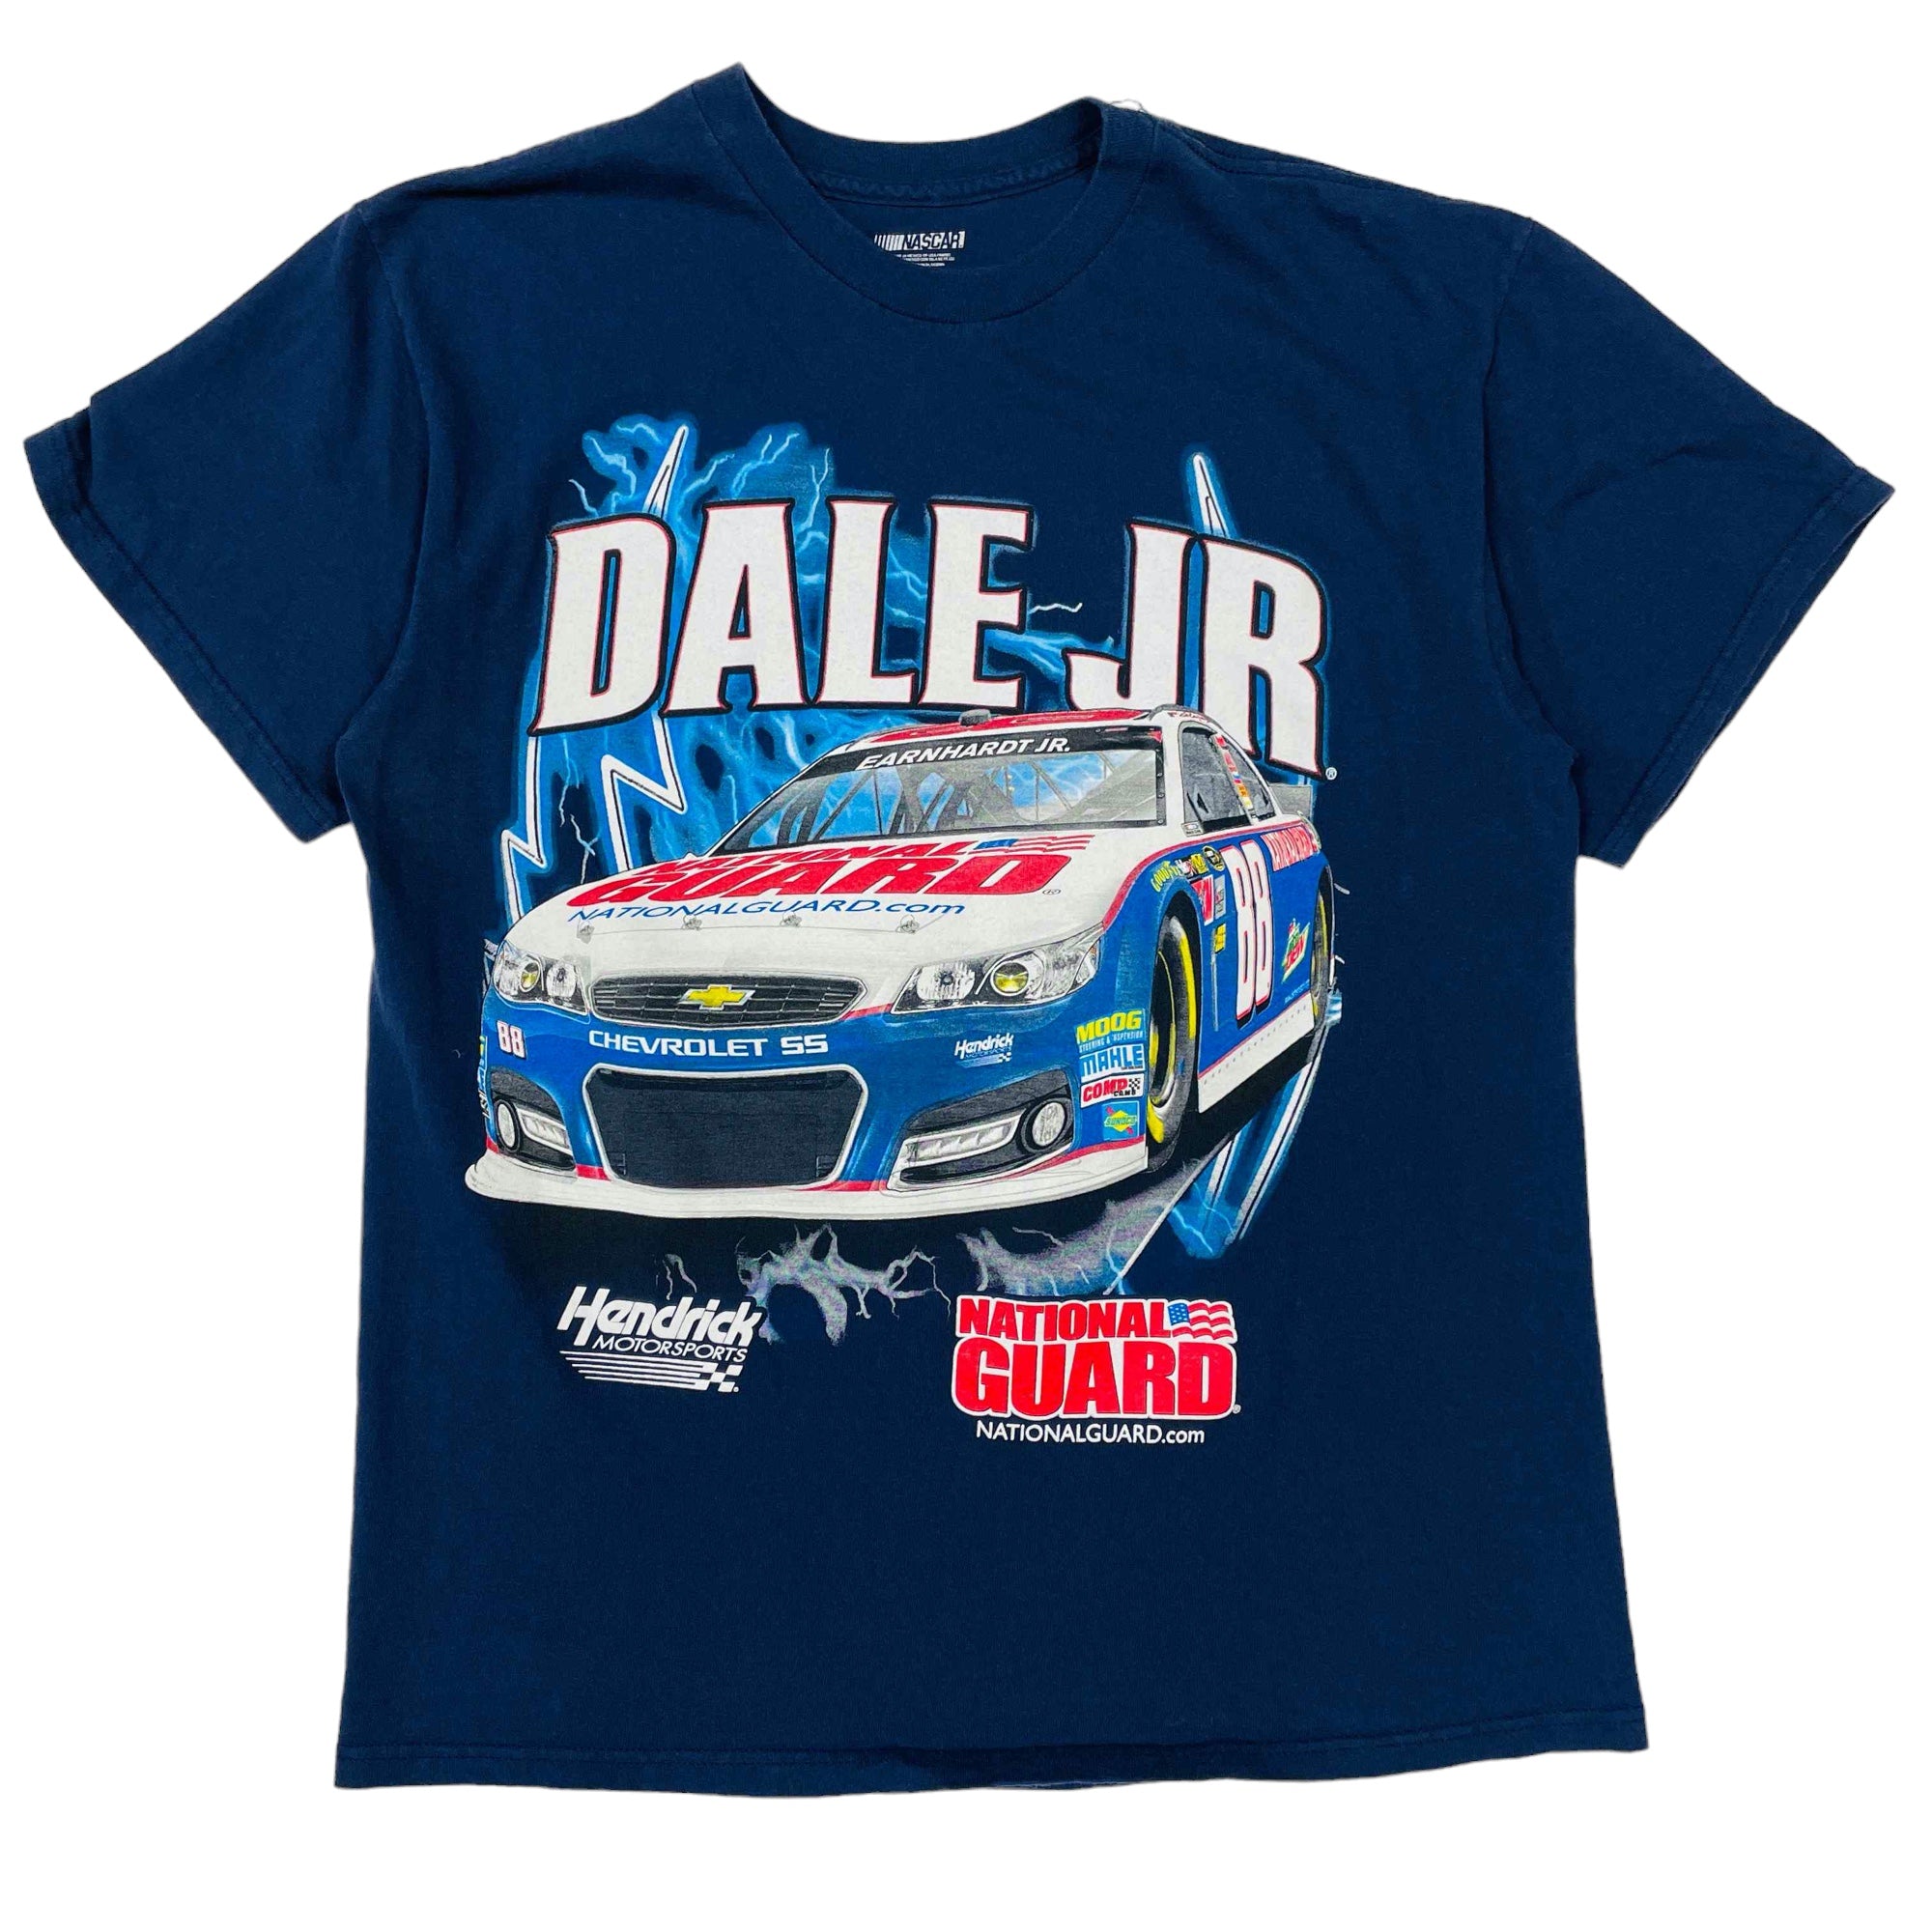 NASCAR Dale Earnhardt Graphic T-Shirt - Large